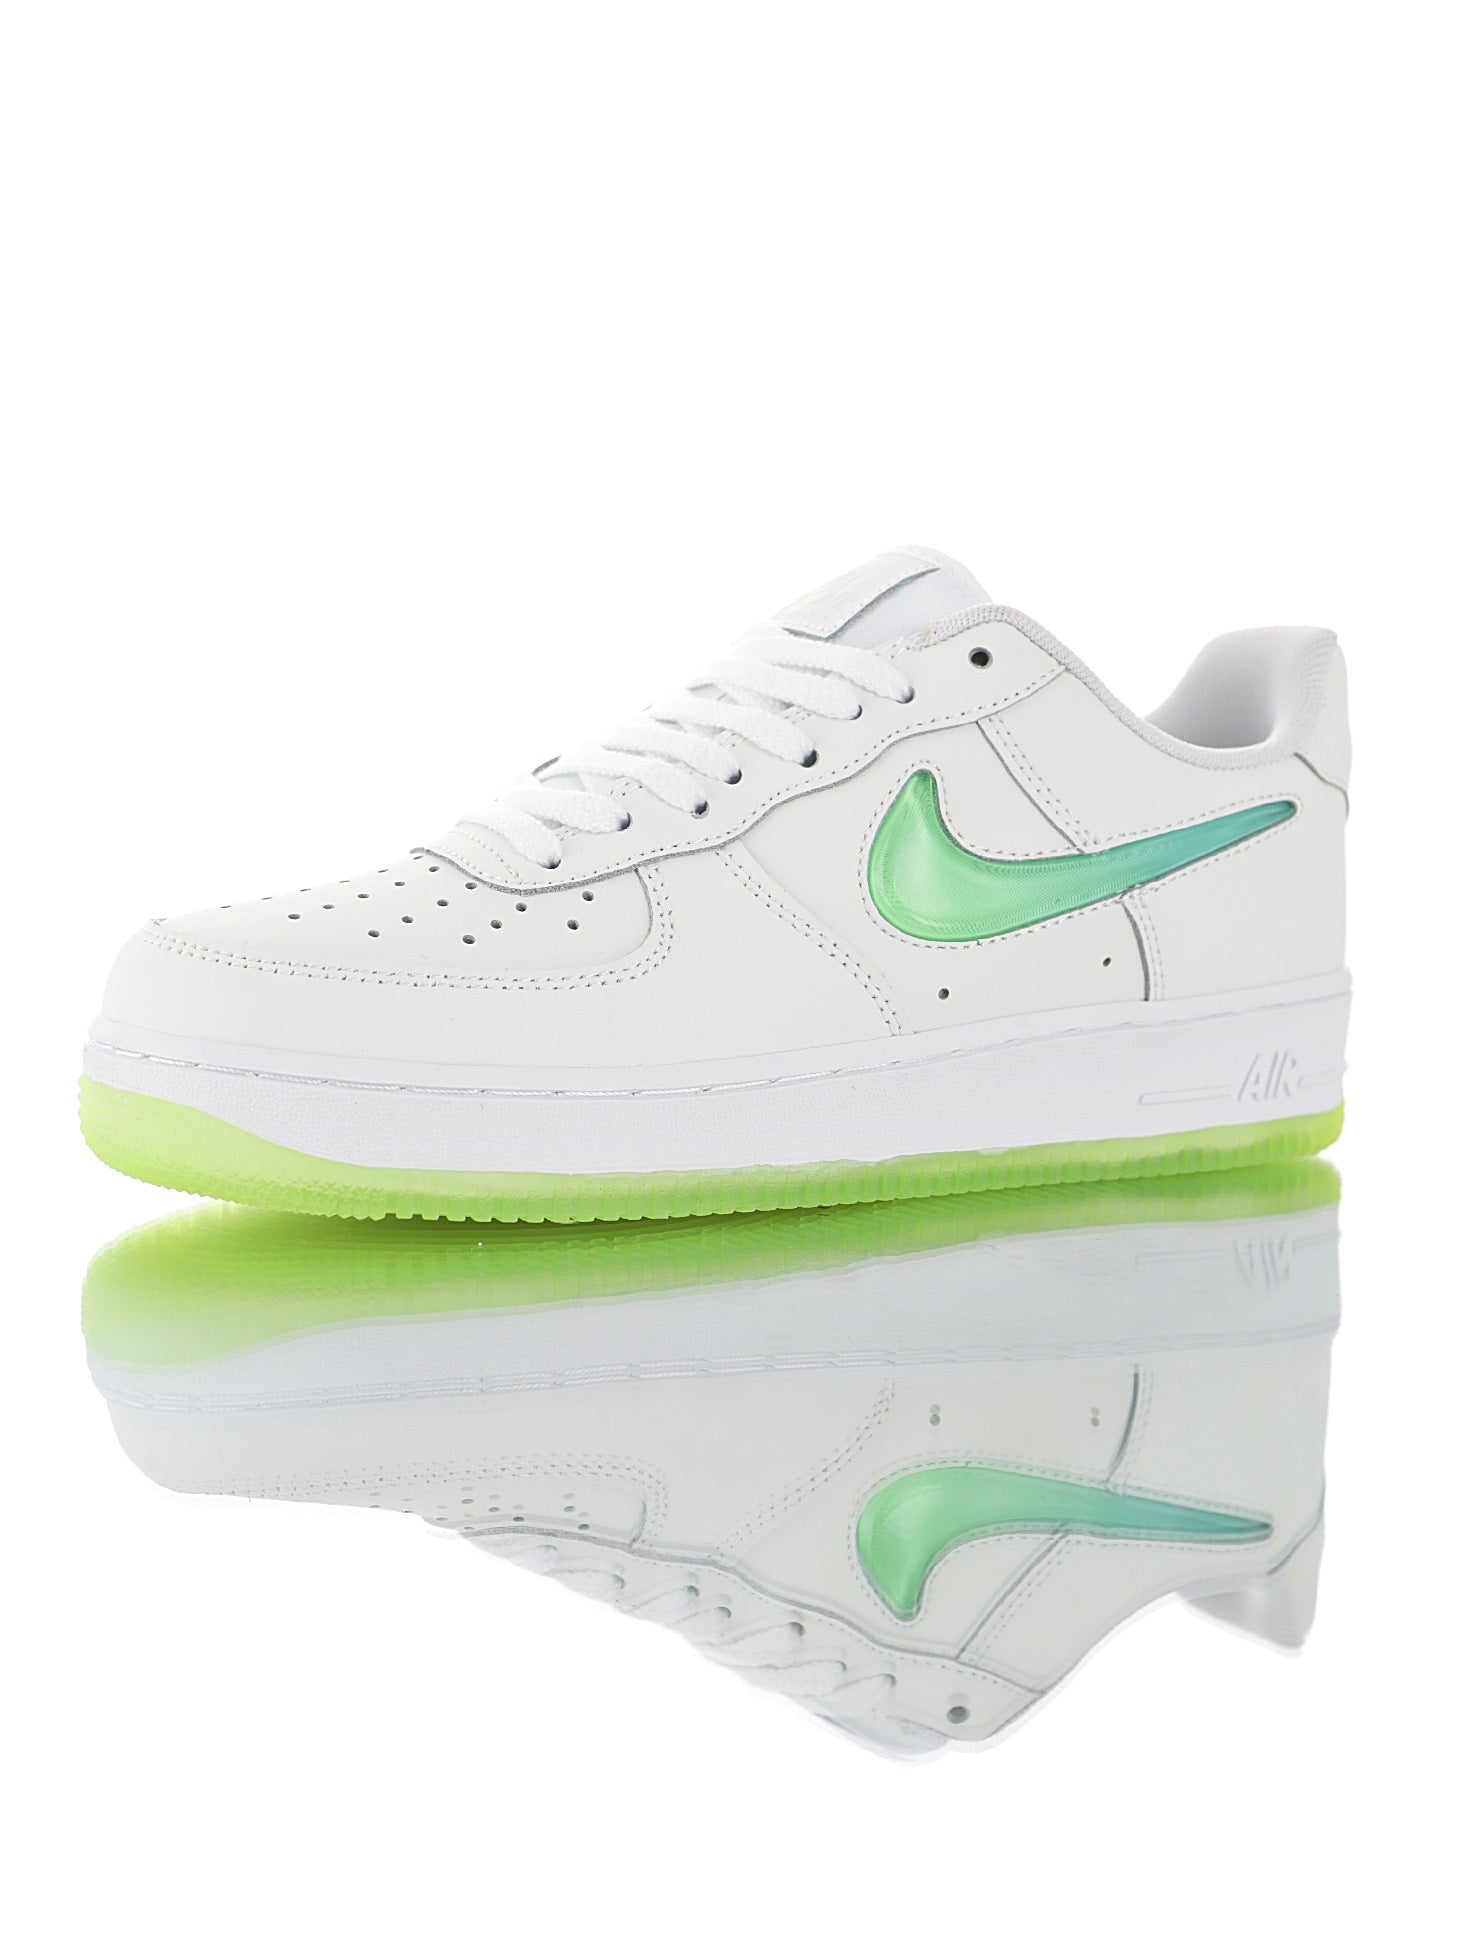 nike air force 1 verdes Nike online – Compra productos Nike baratos